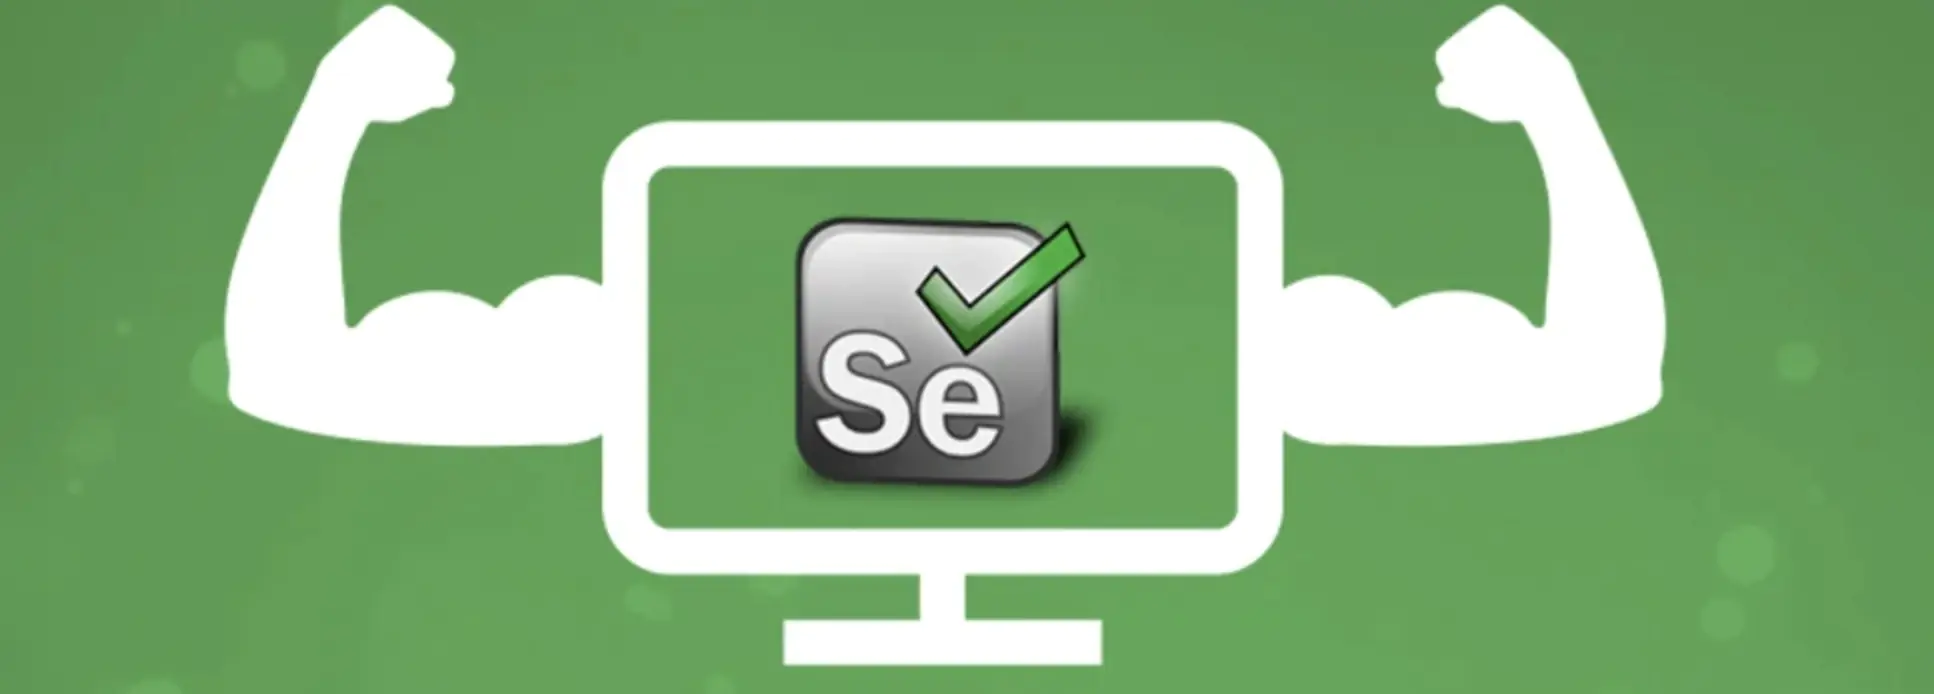 How to use Selenium to scrape data?